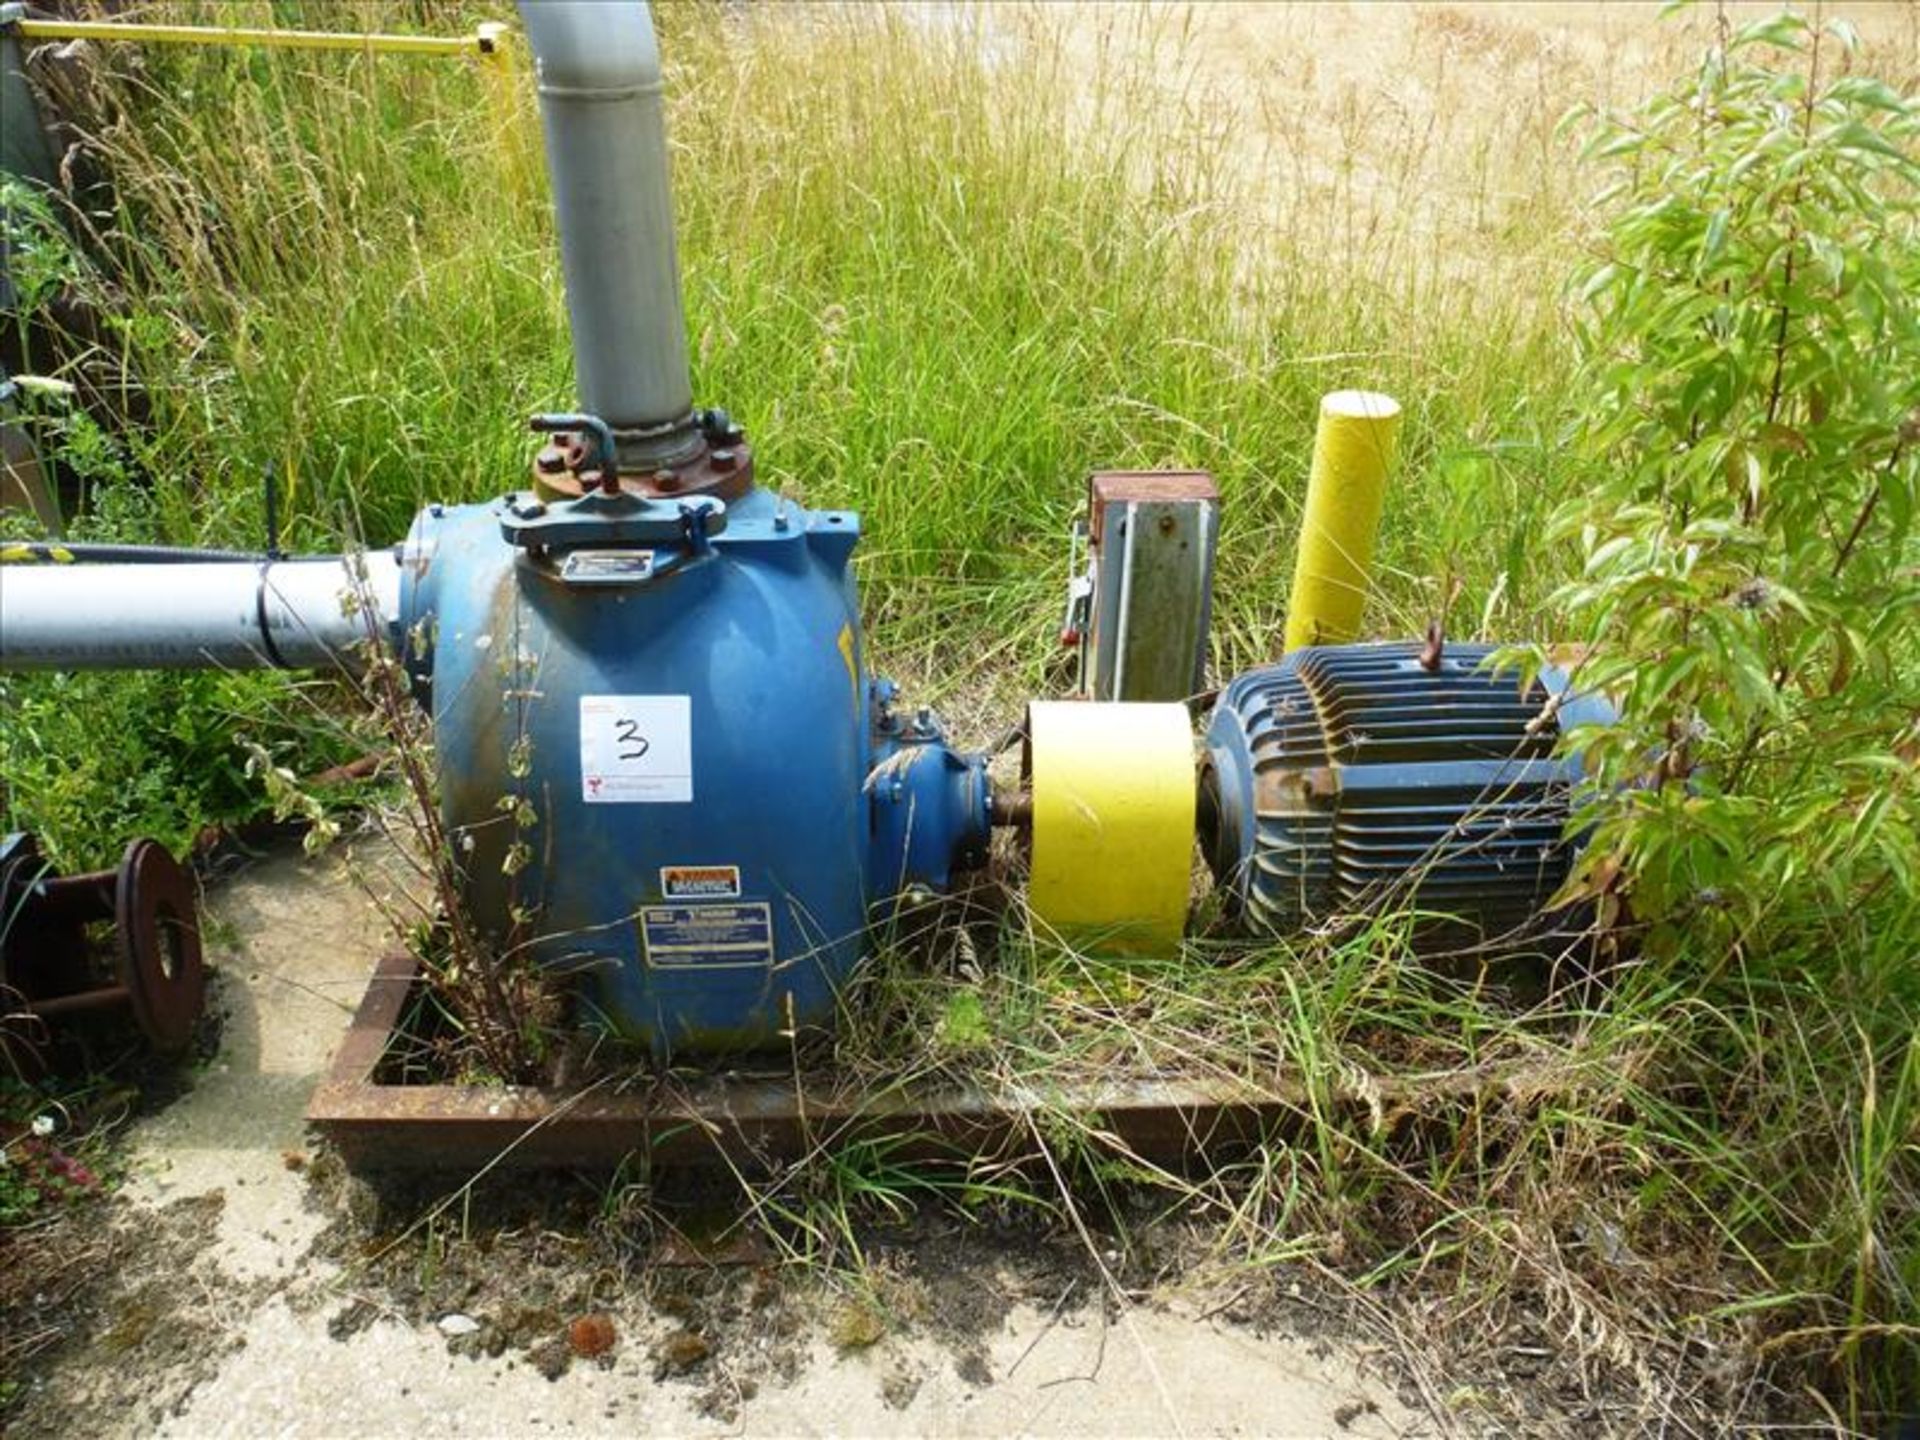 Gorman-Rupp self-priming centrifugal pump, mod. T4A60-B, ser. no. 106420, 25 h.p., T-Series